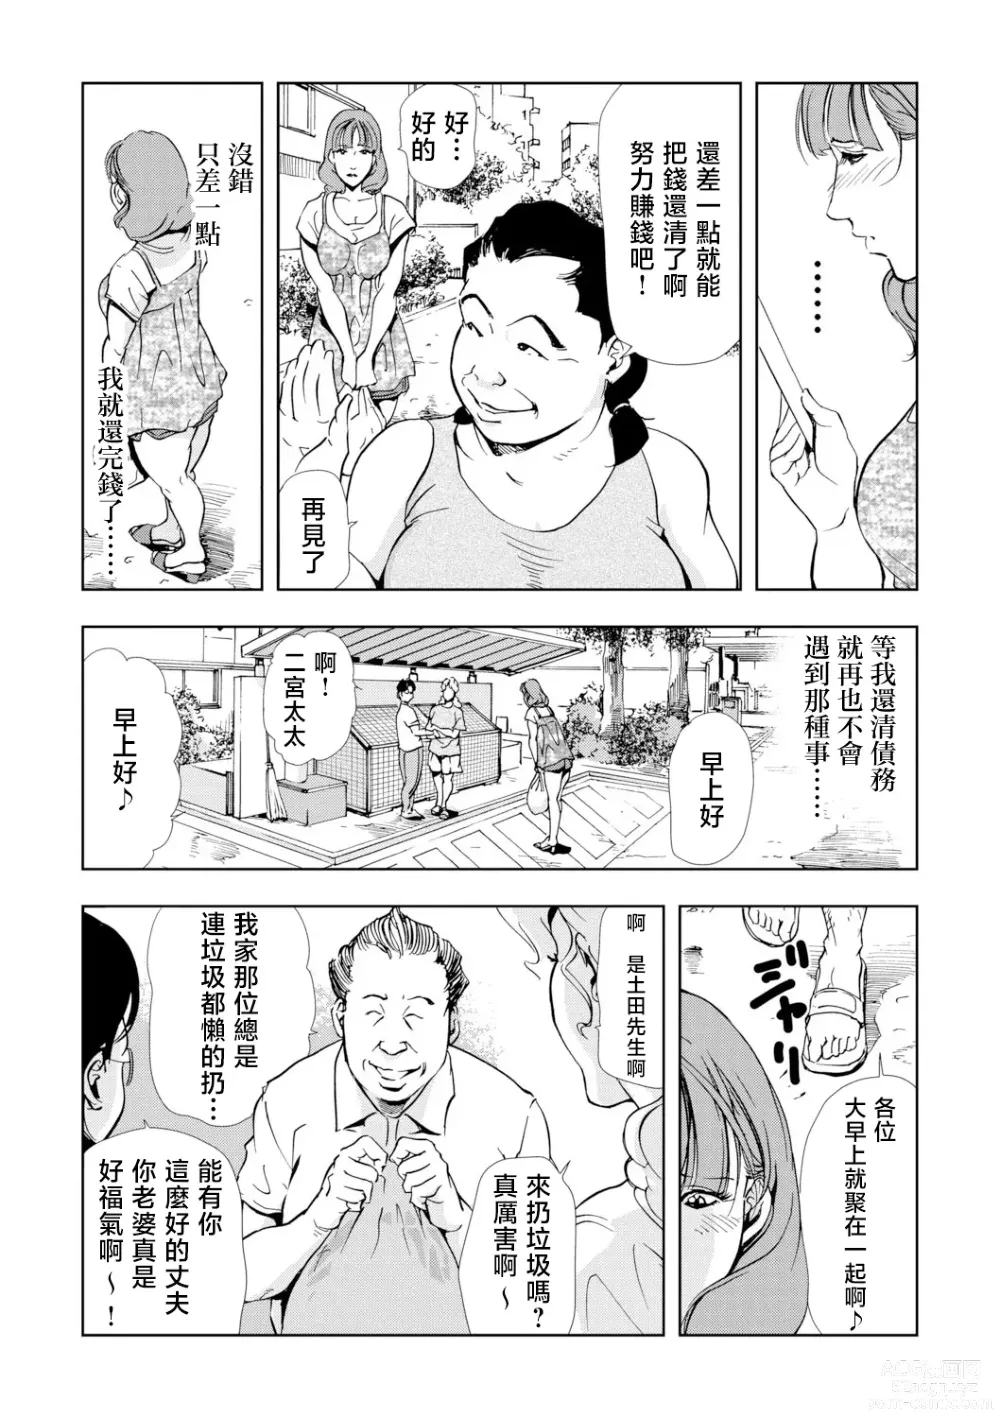 Page 7 of manga Netorare Vol.03